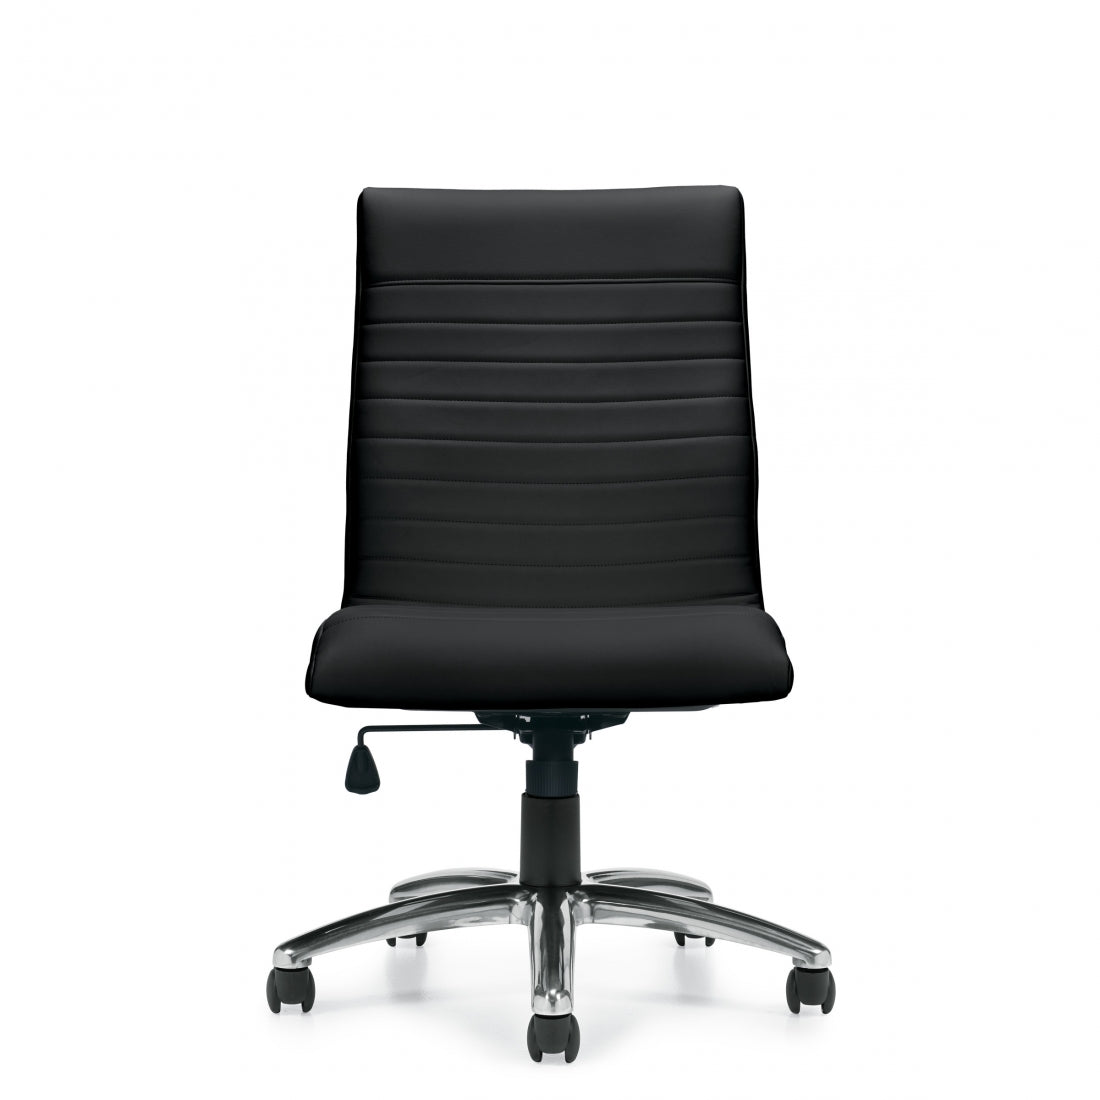 Luxhide Executive Chair - Armless - OTG 11732